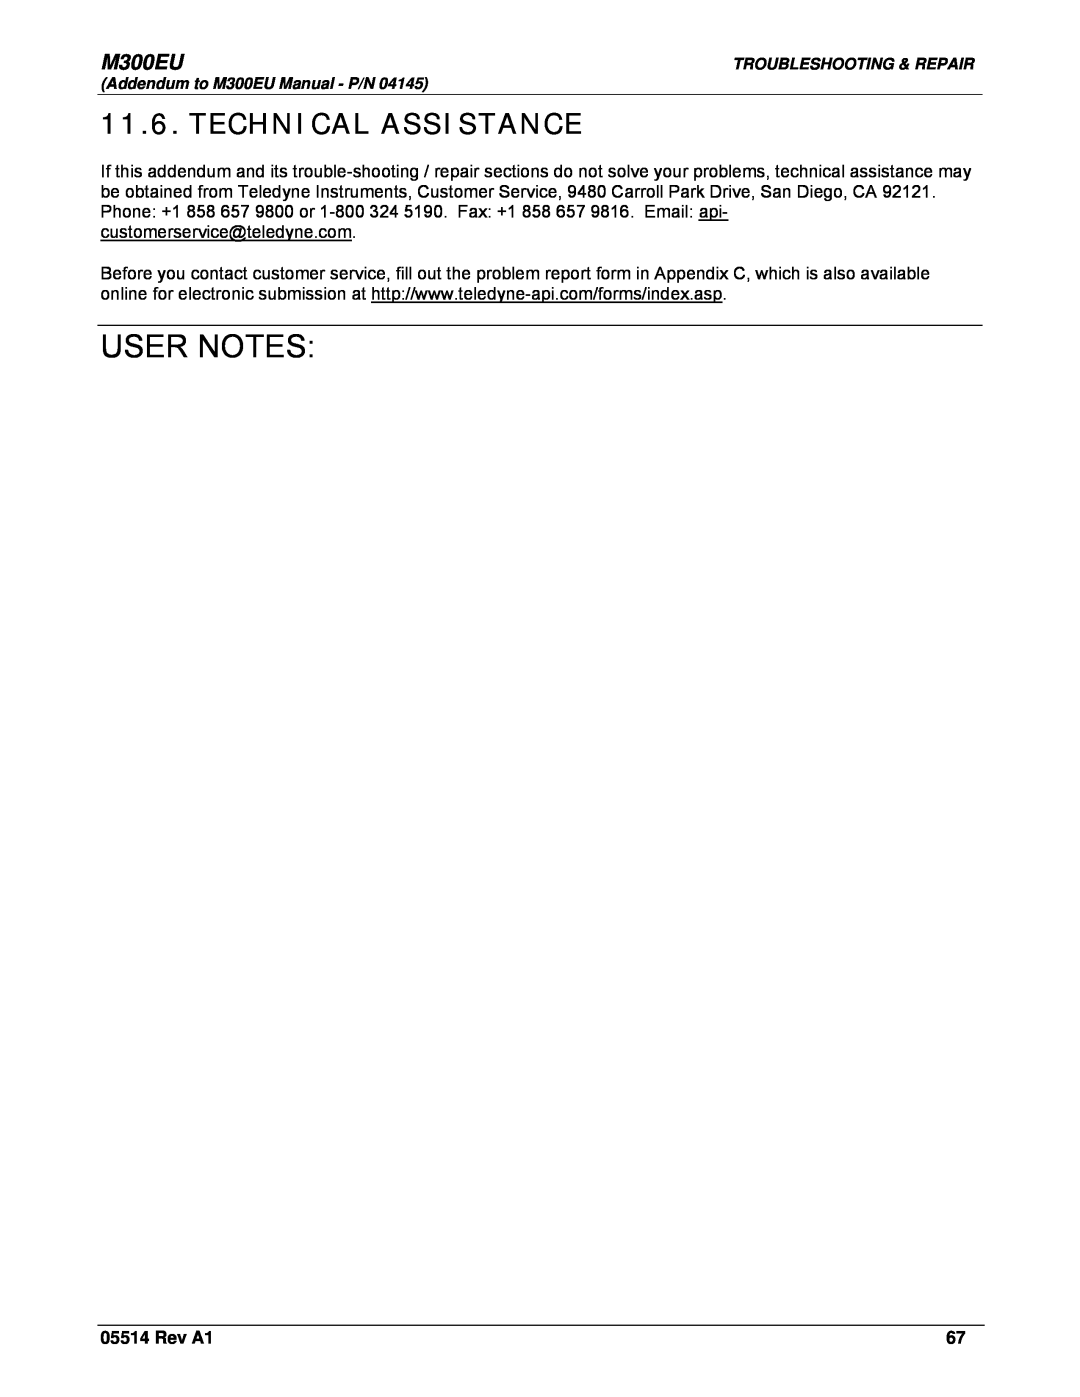 Teledyne Model 300EU manual Technical Assistance, User Notes, M300EU, Rev A1 